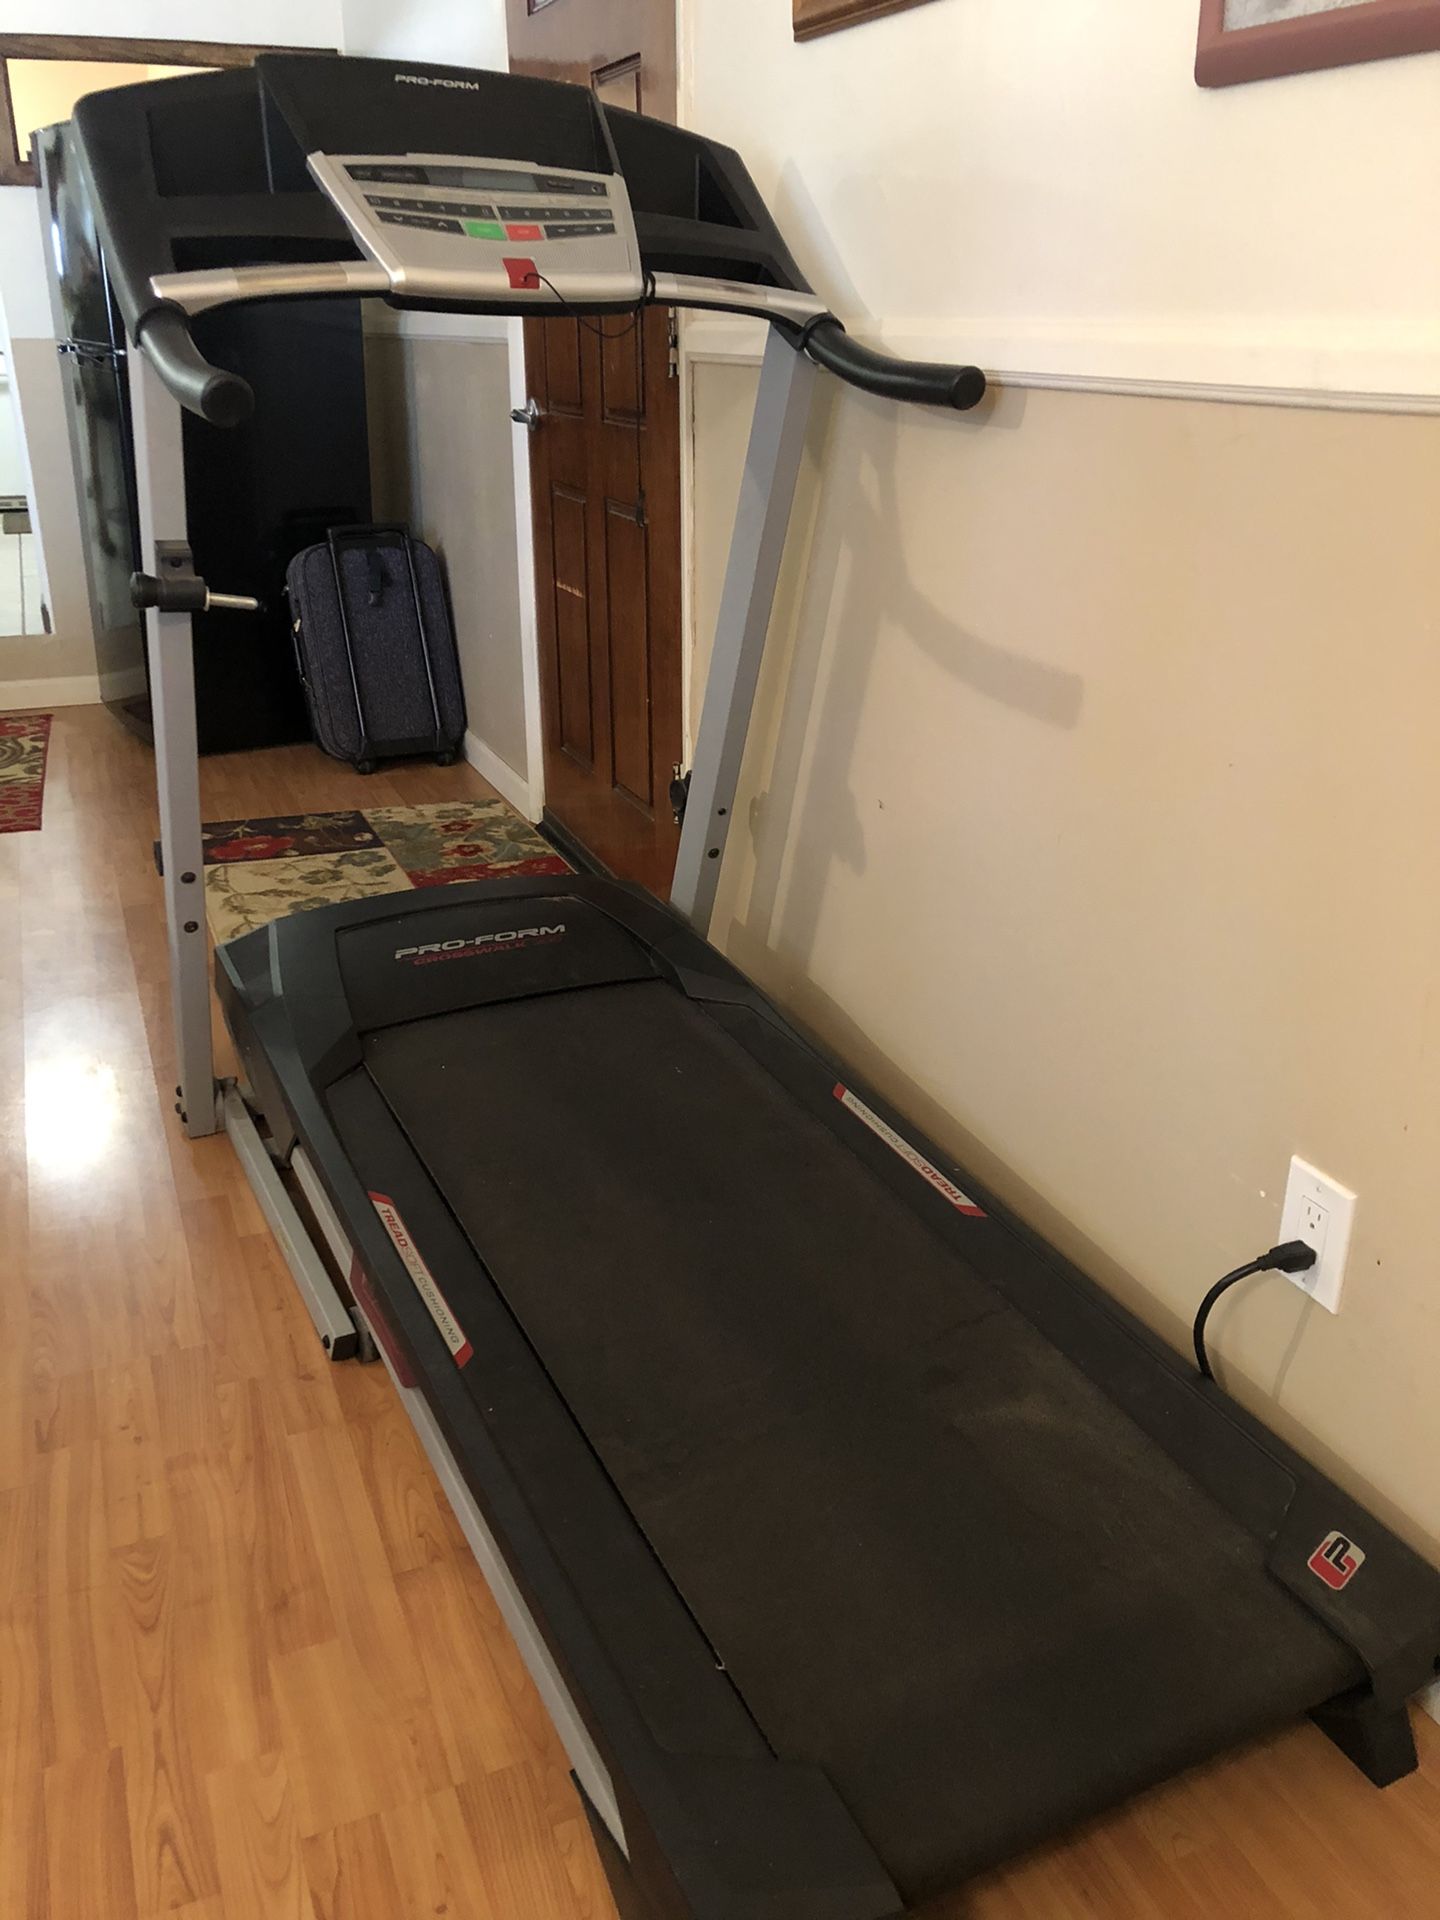 ProForm 395 Crosswalk Treadmill in excellent condition